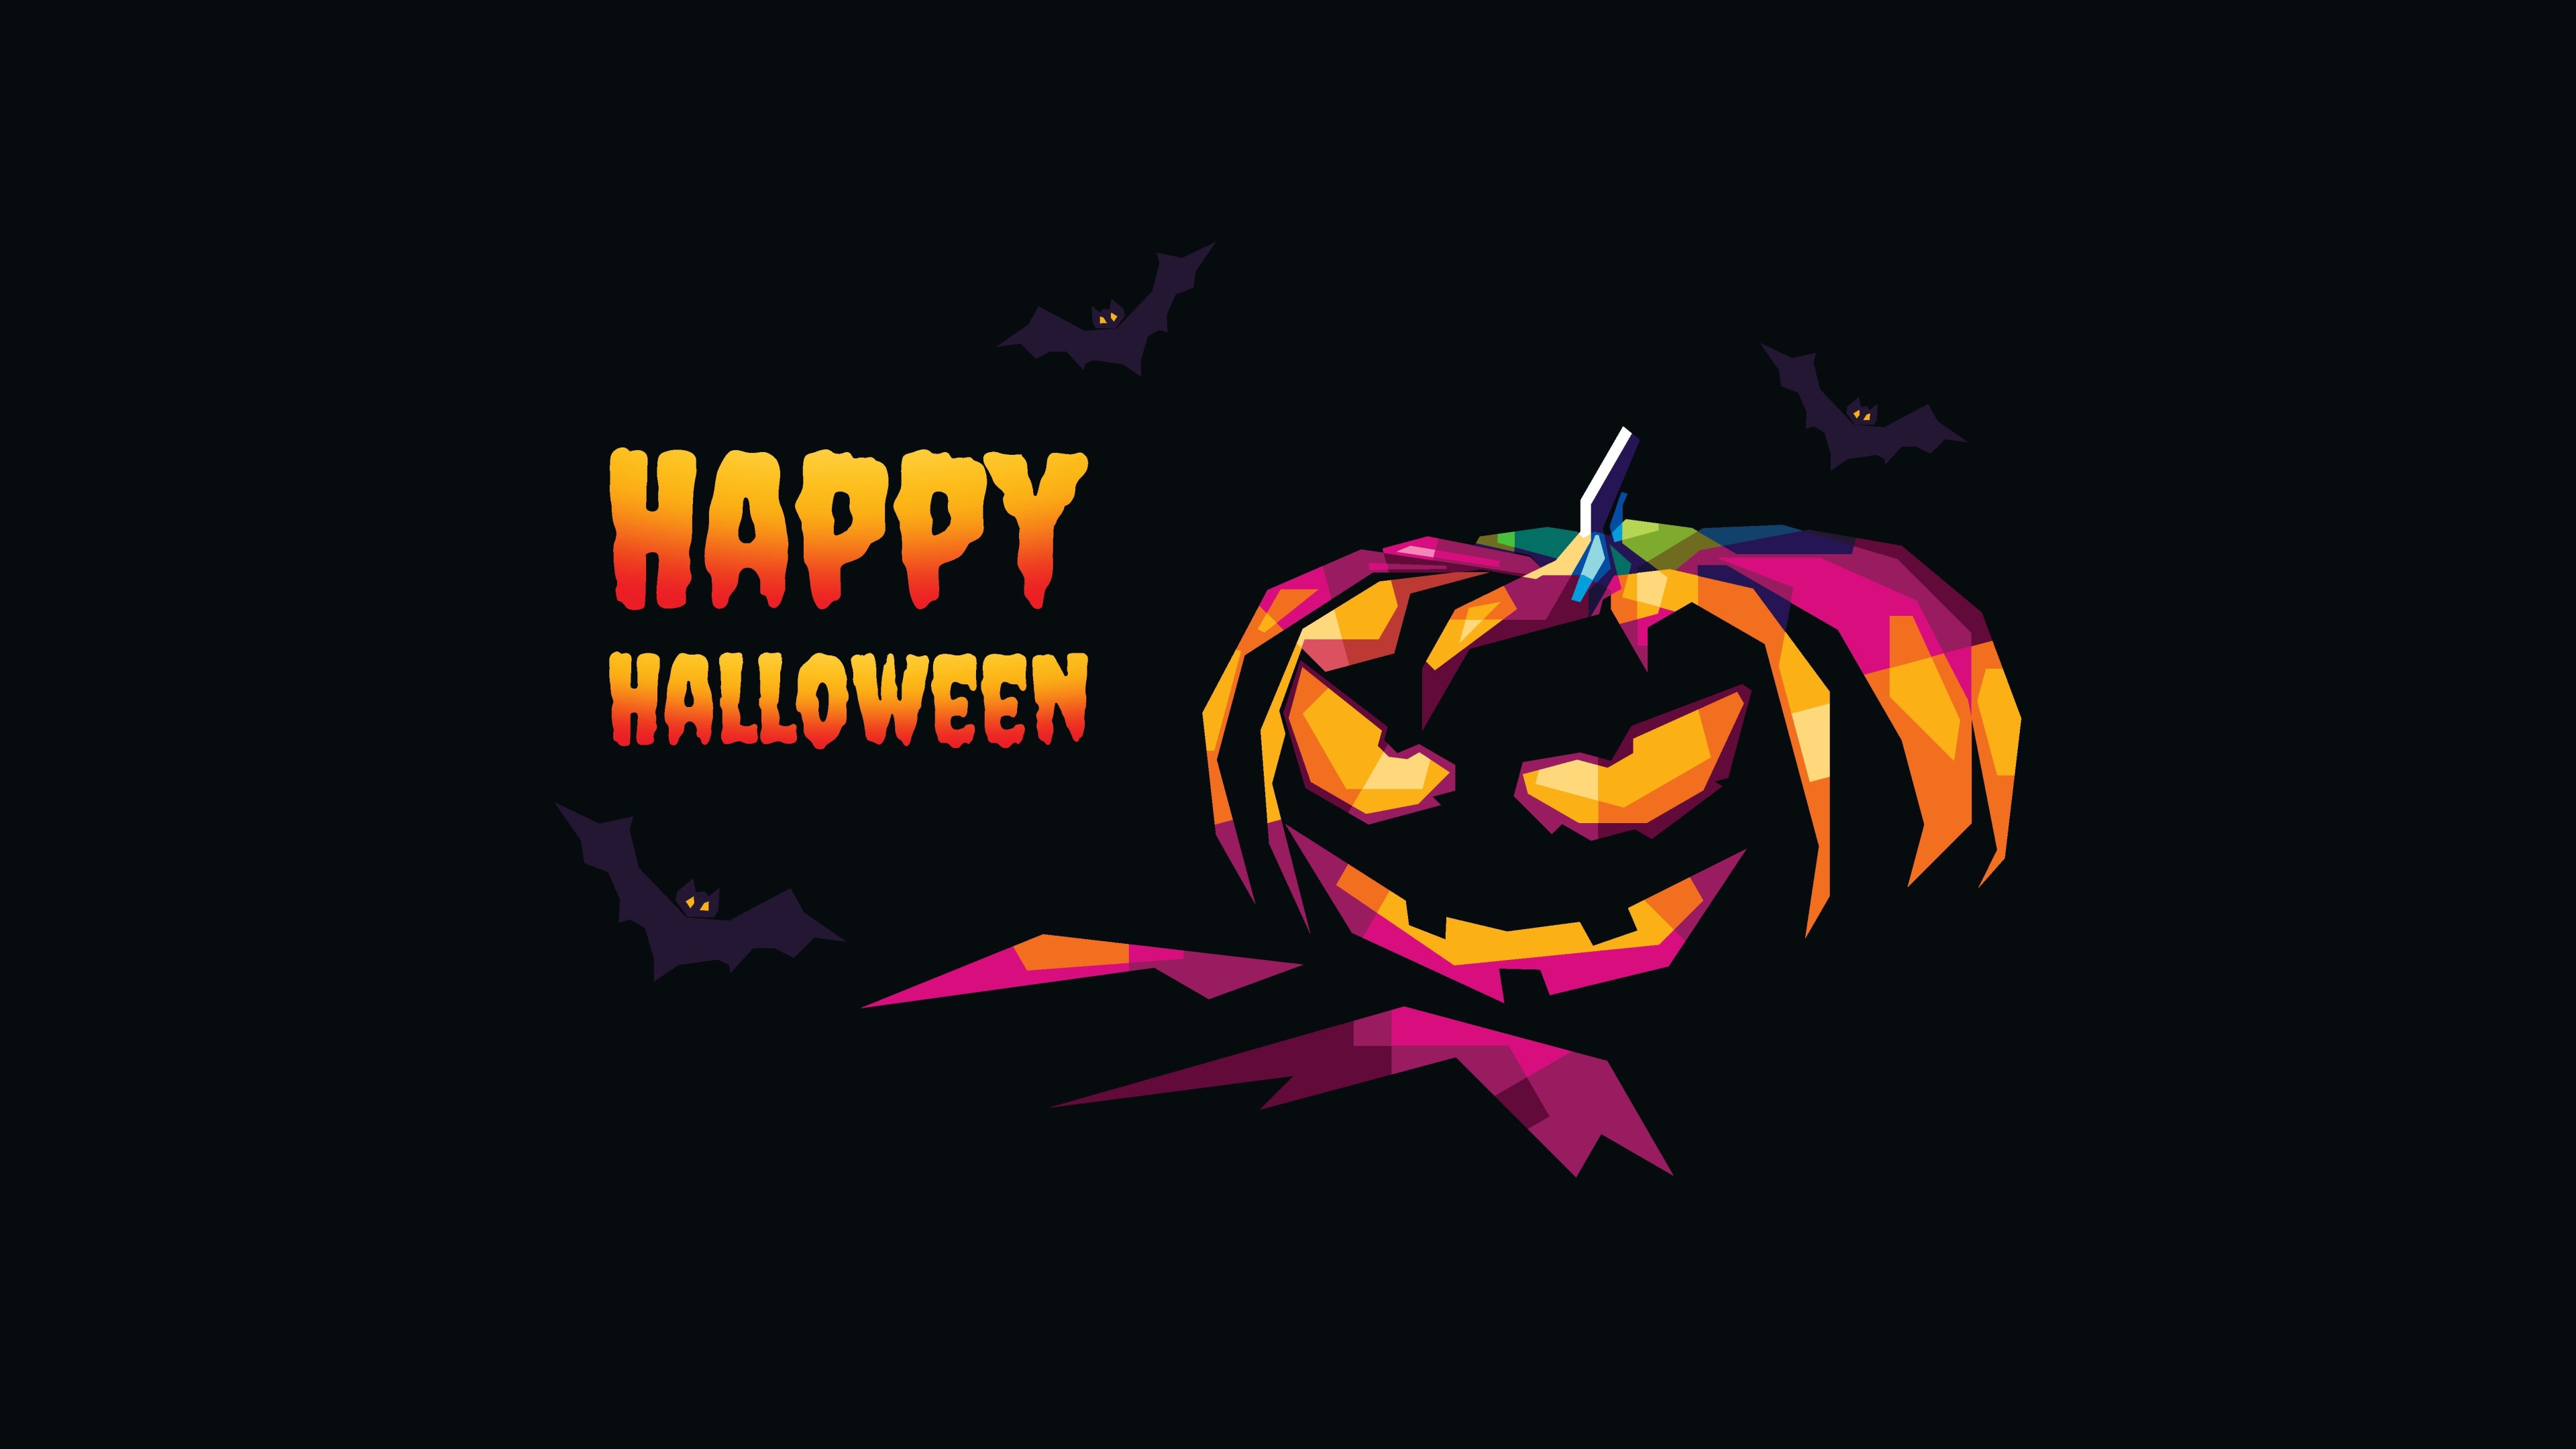 HD wallpaper, Amoled, Happy Halloween, Halloween Pumpkin, Black Background